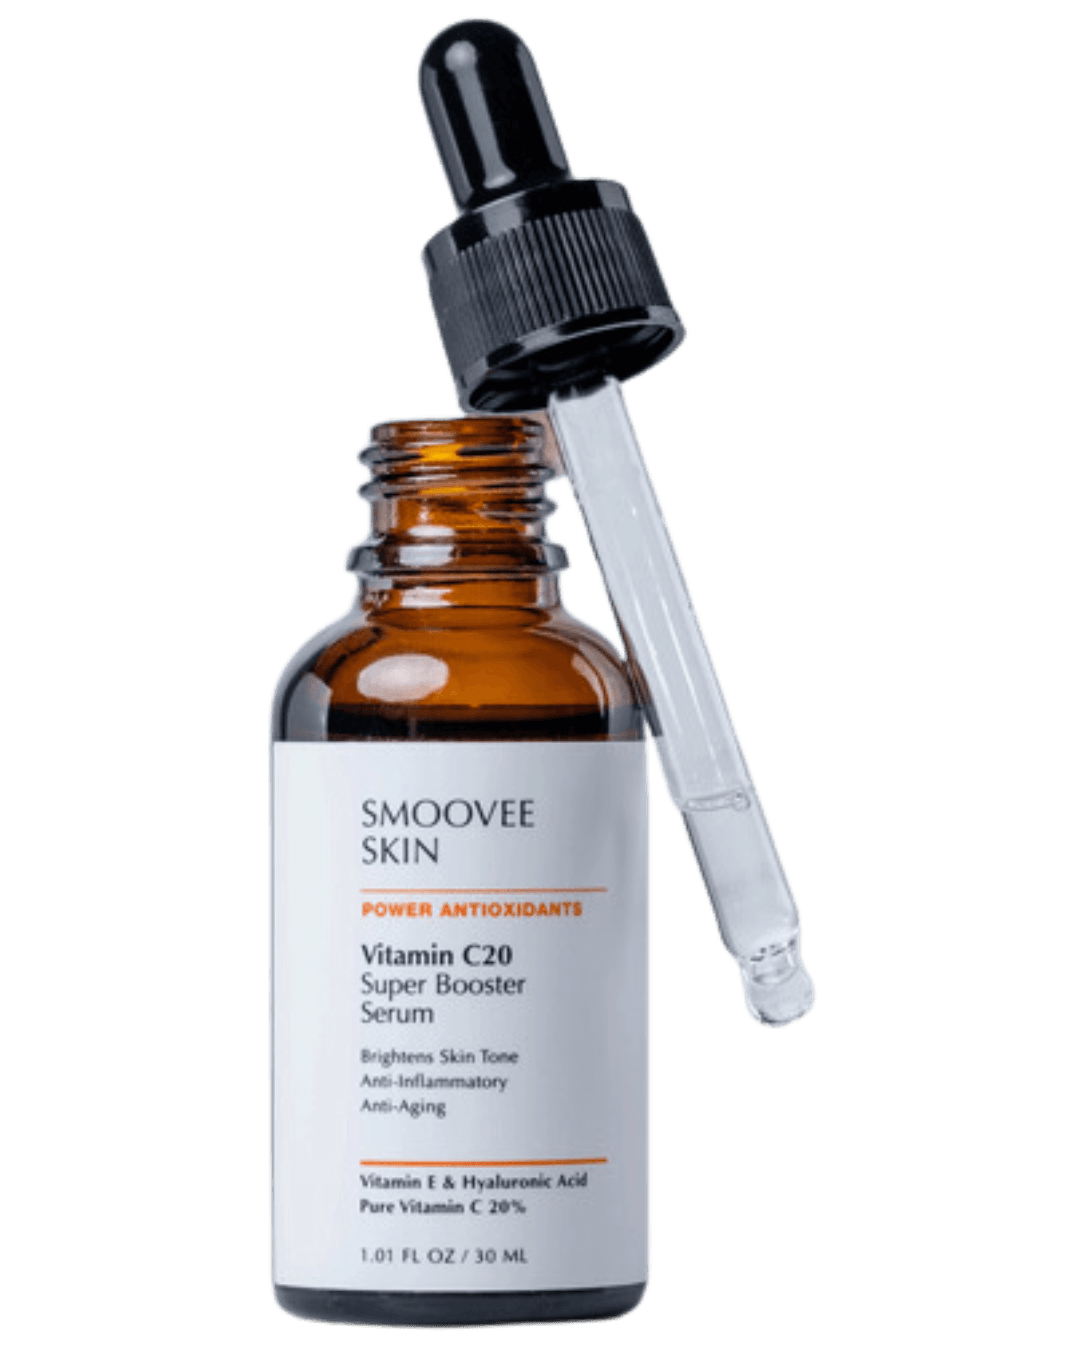 Smoovee Skin Vitamin C20 Super Booster Serum